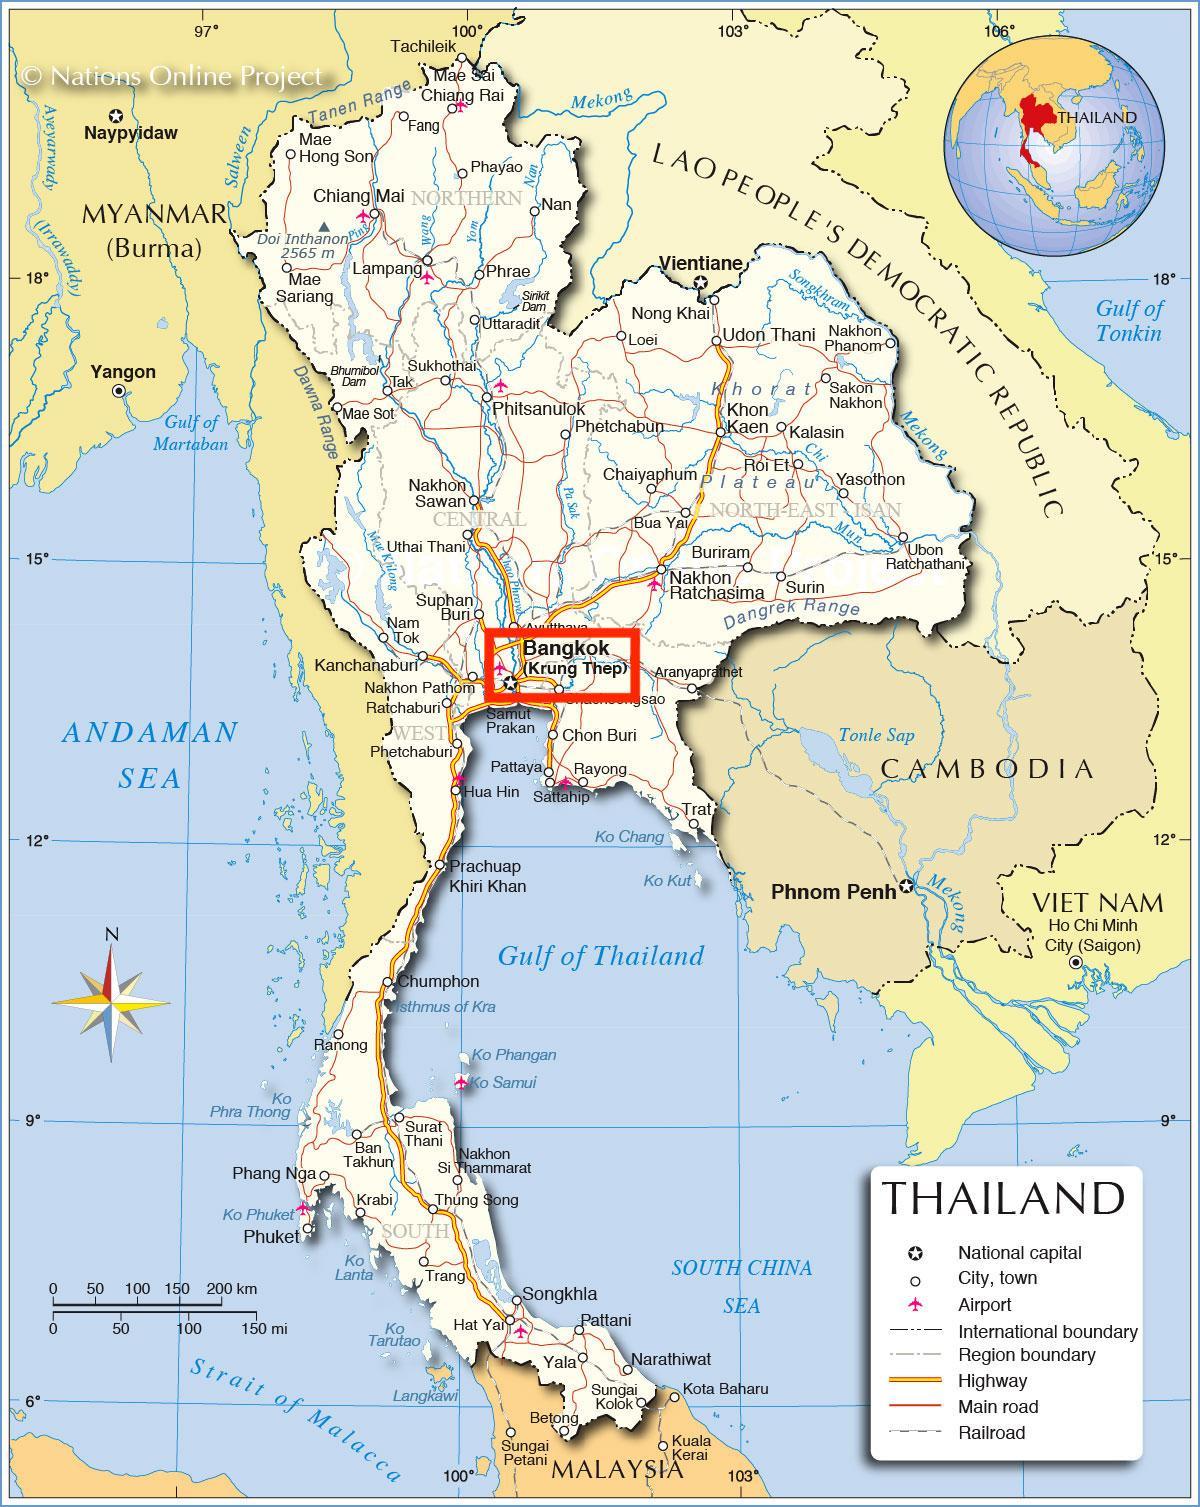 Bangkok (Krung Thep) on Thailand map